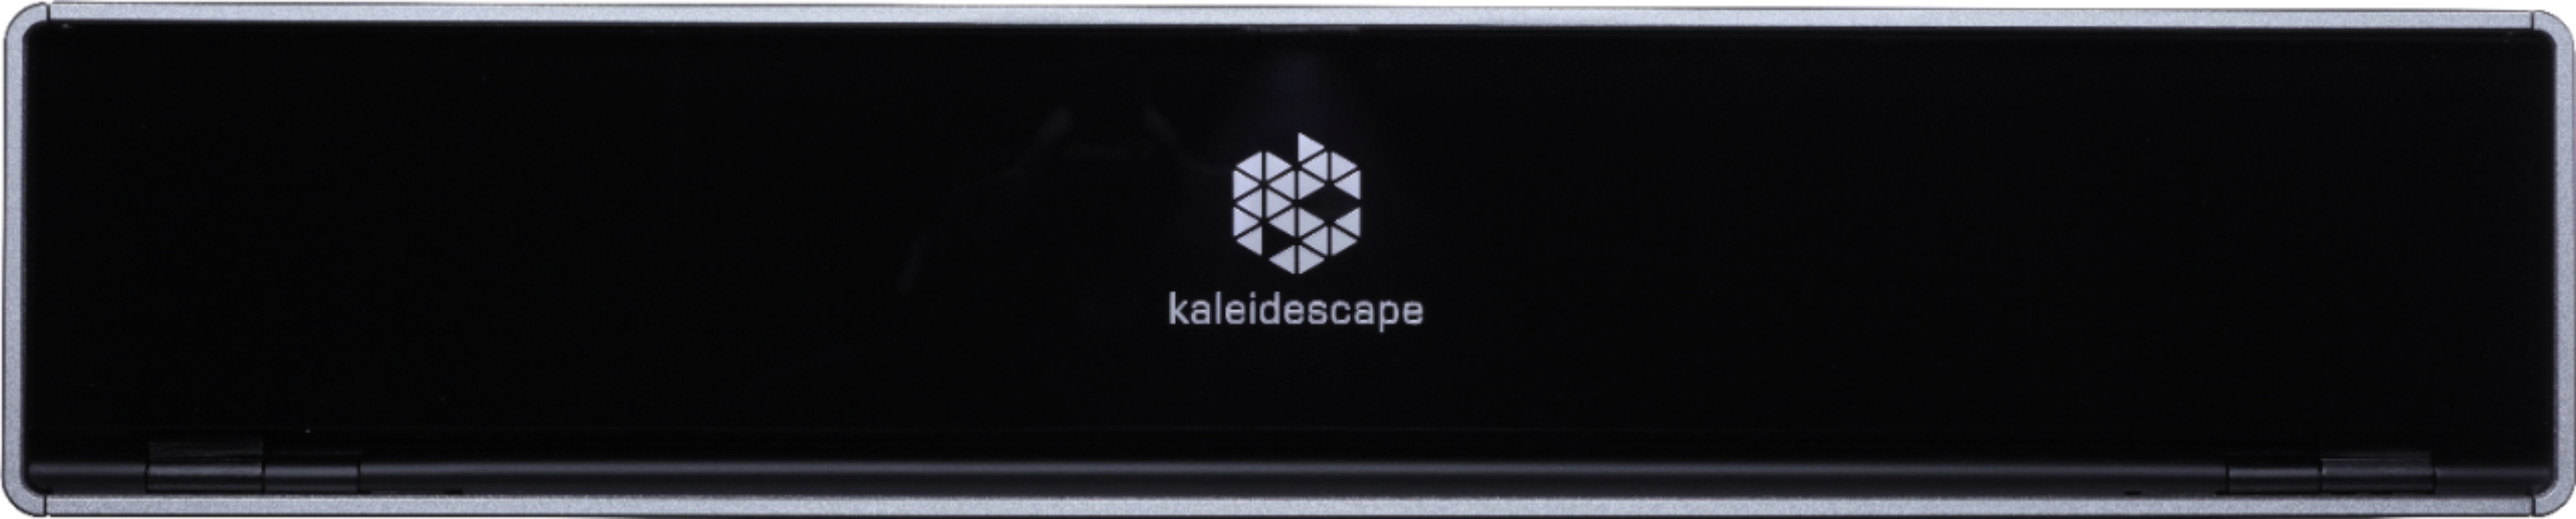 Kaleidescape - Terra 24TB movie server - Black/Silver